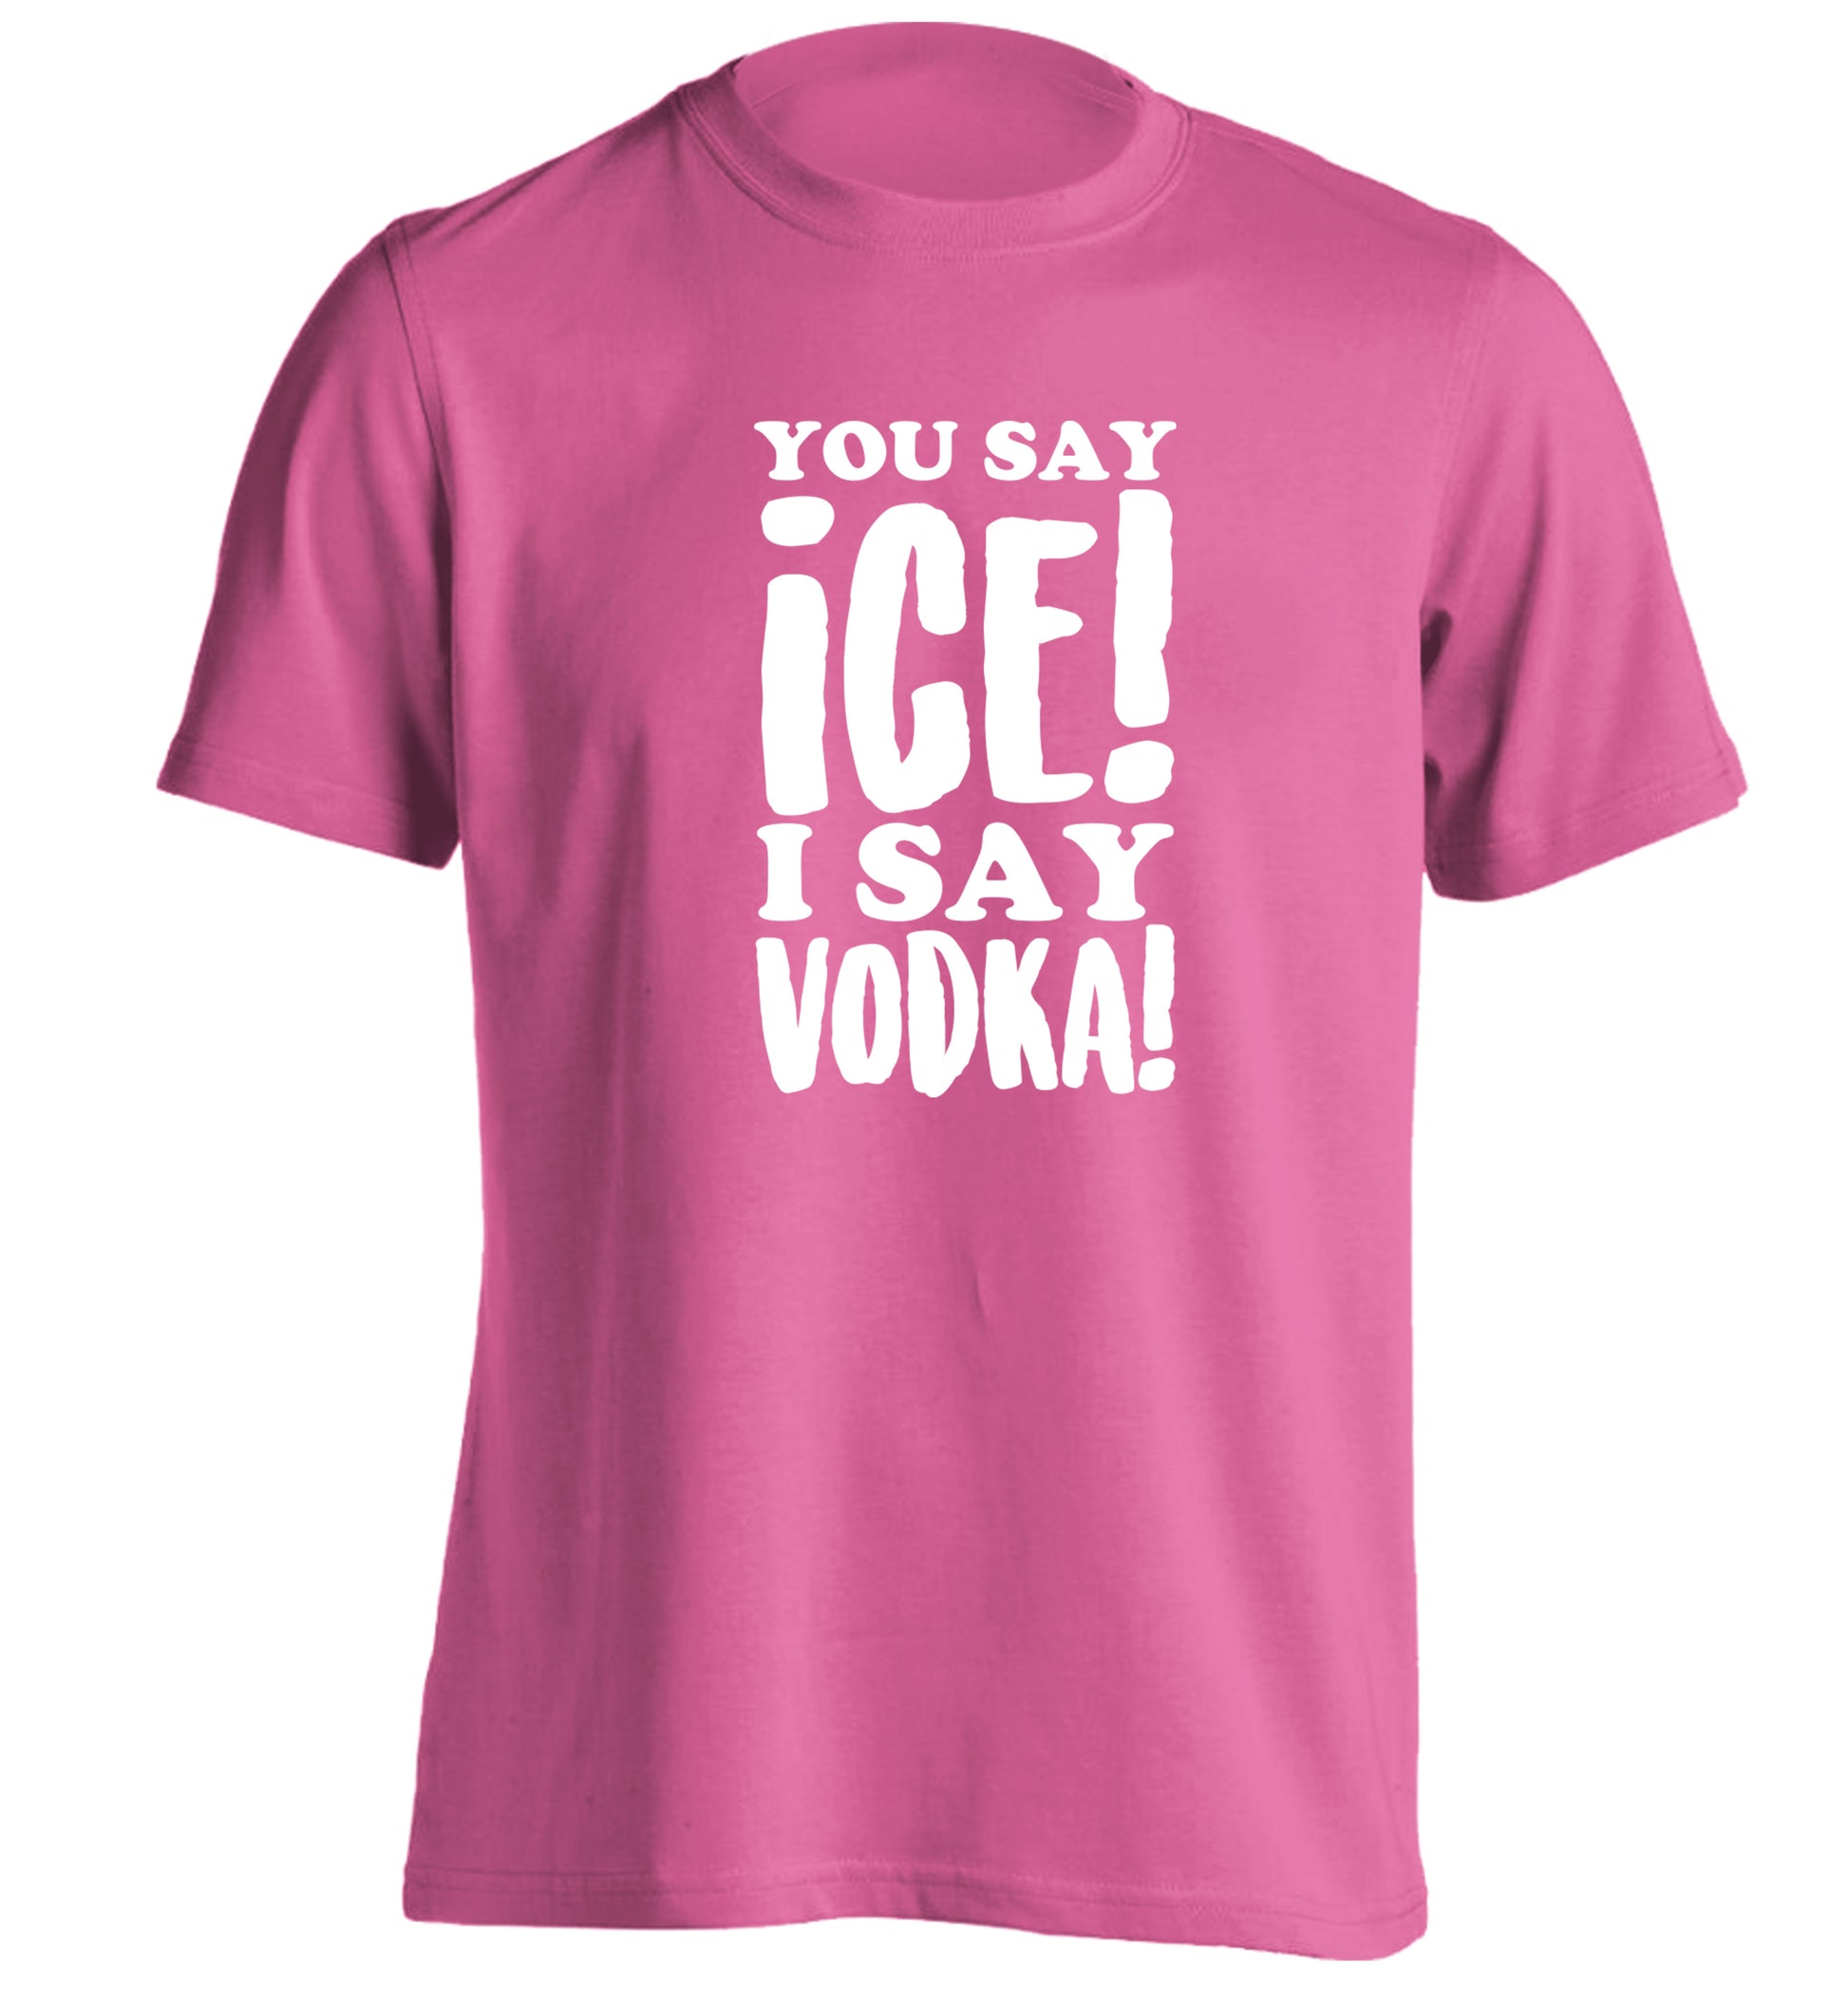 You say ice I say vodka! adults unisex pink Tshirt 2XL